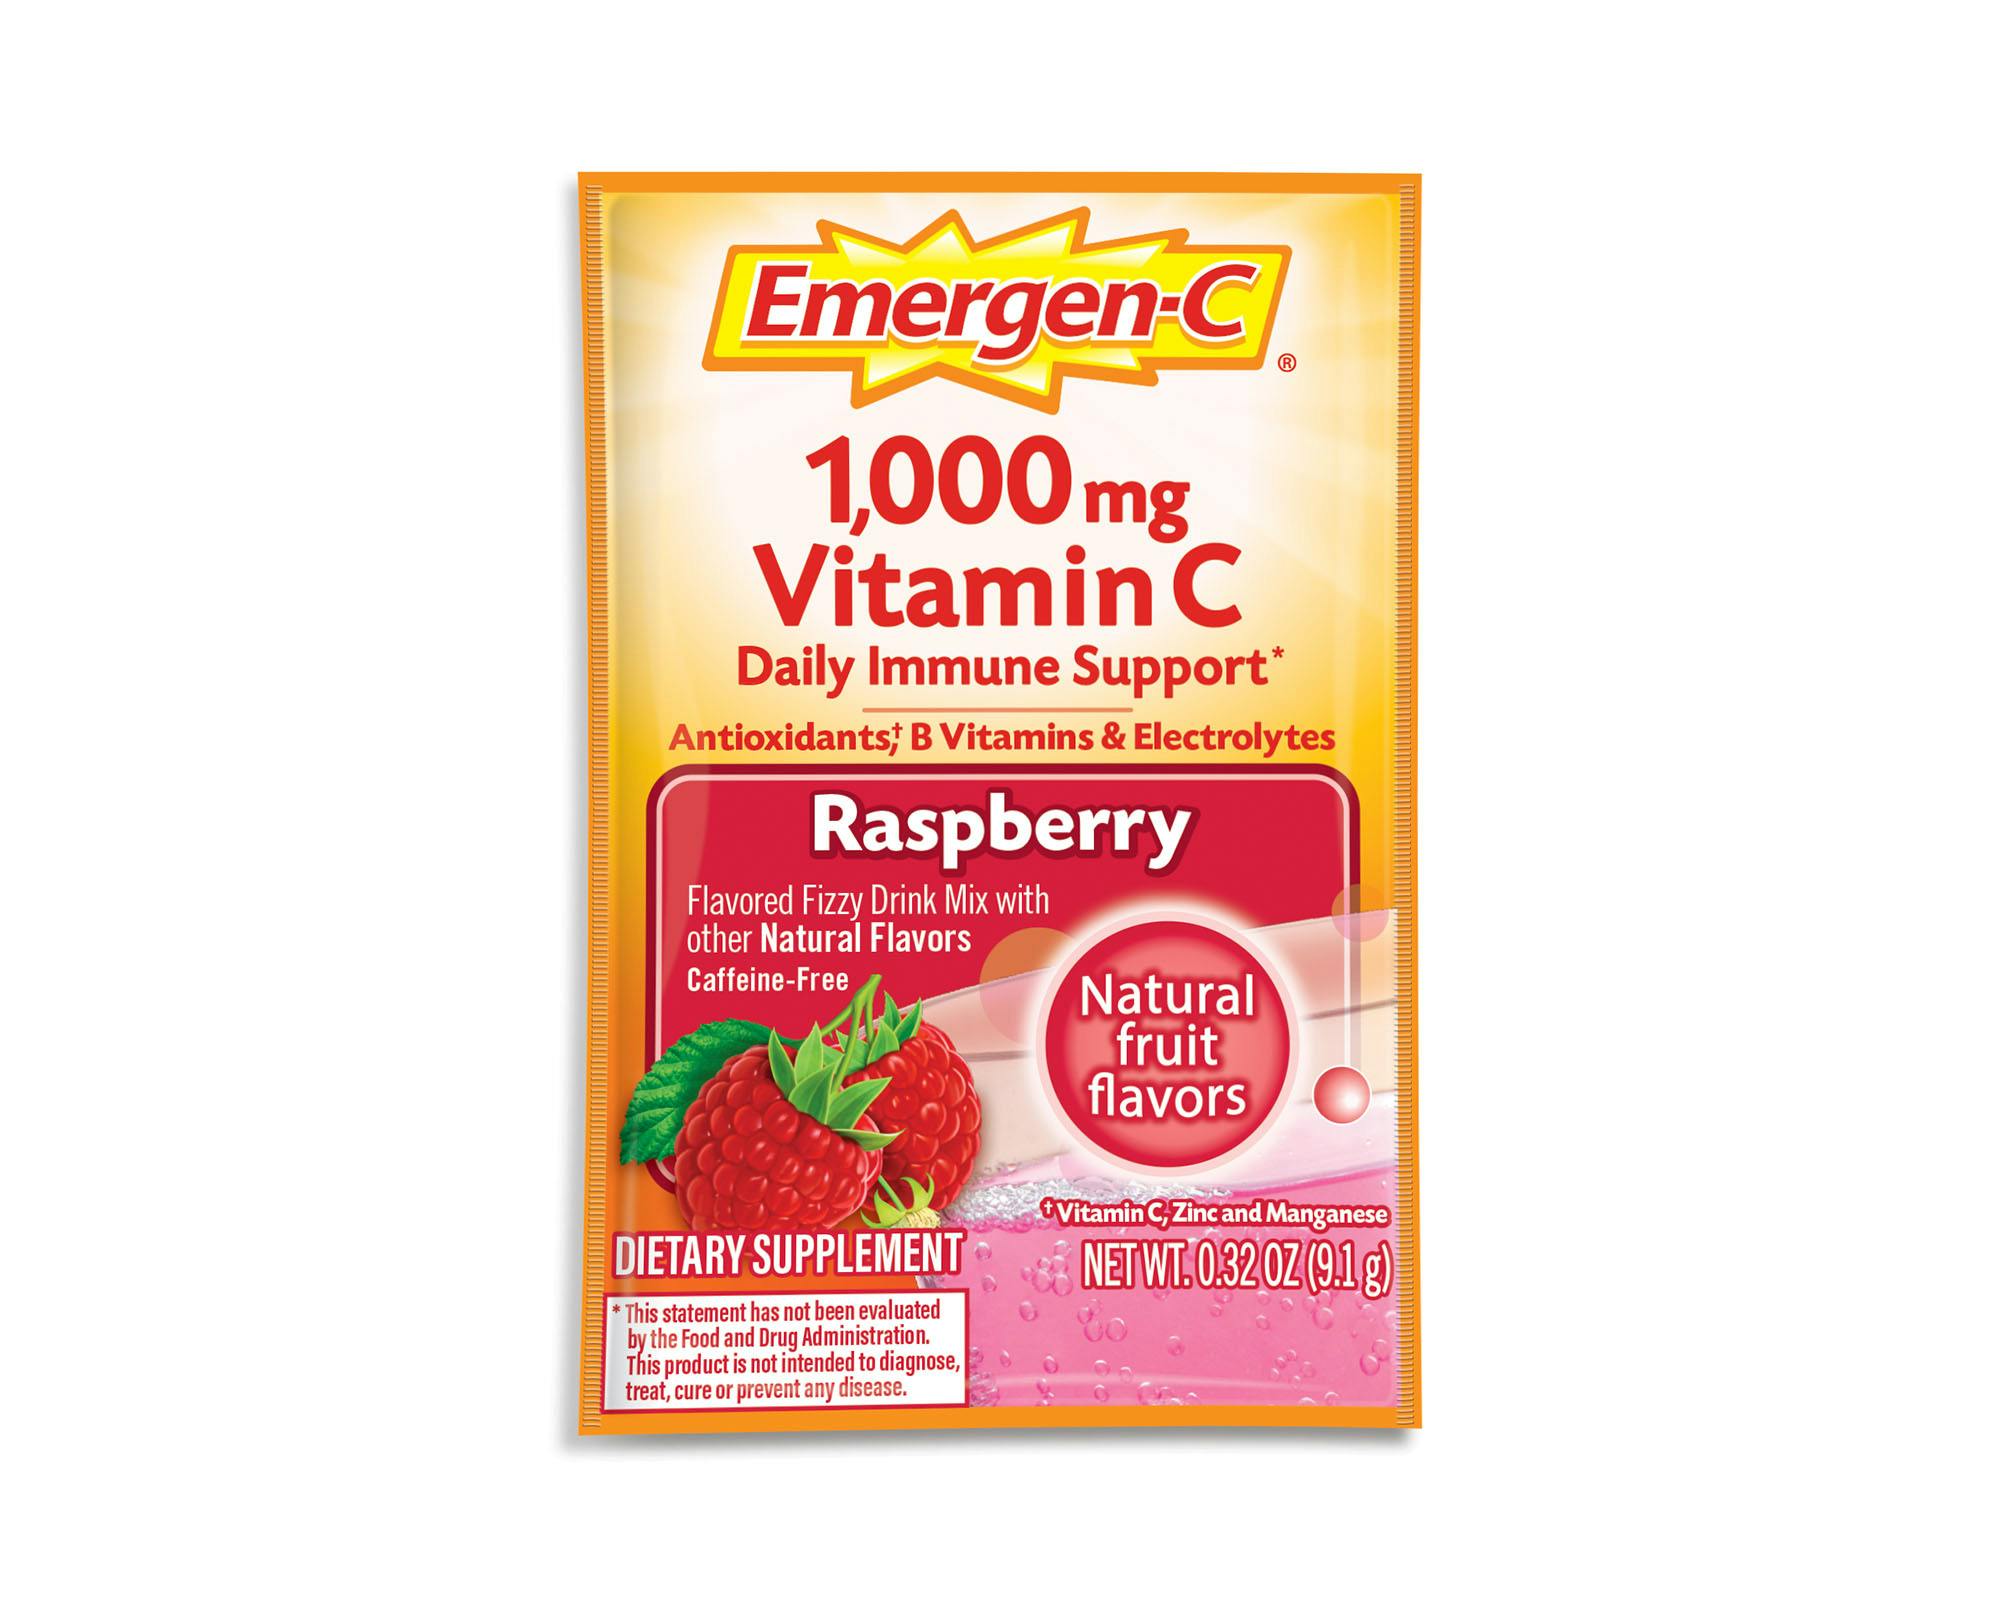 Raspberry Original Immune Support packet